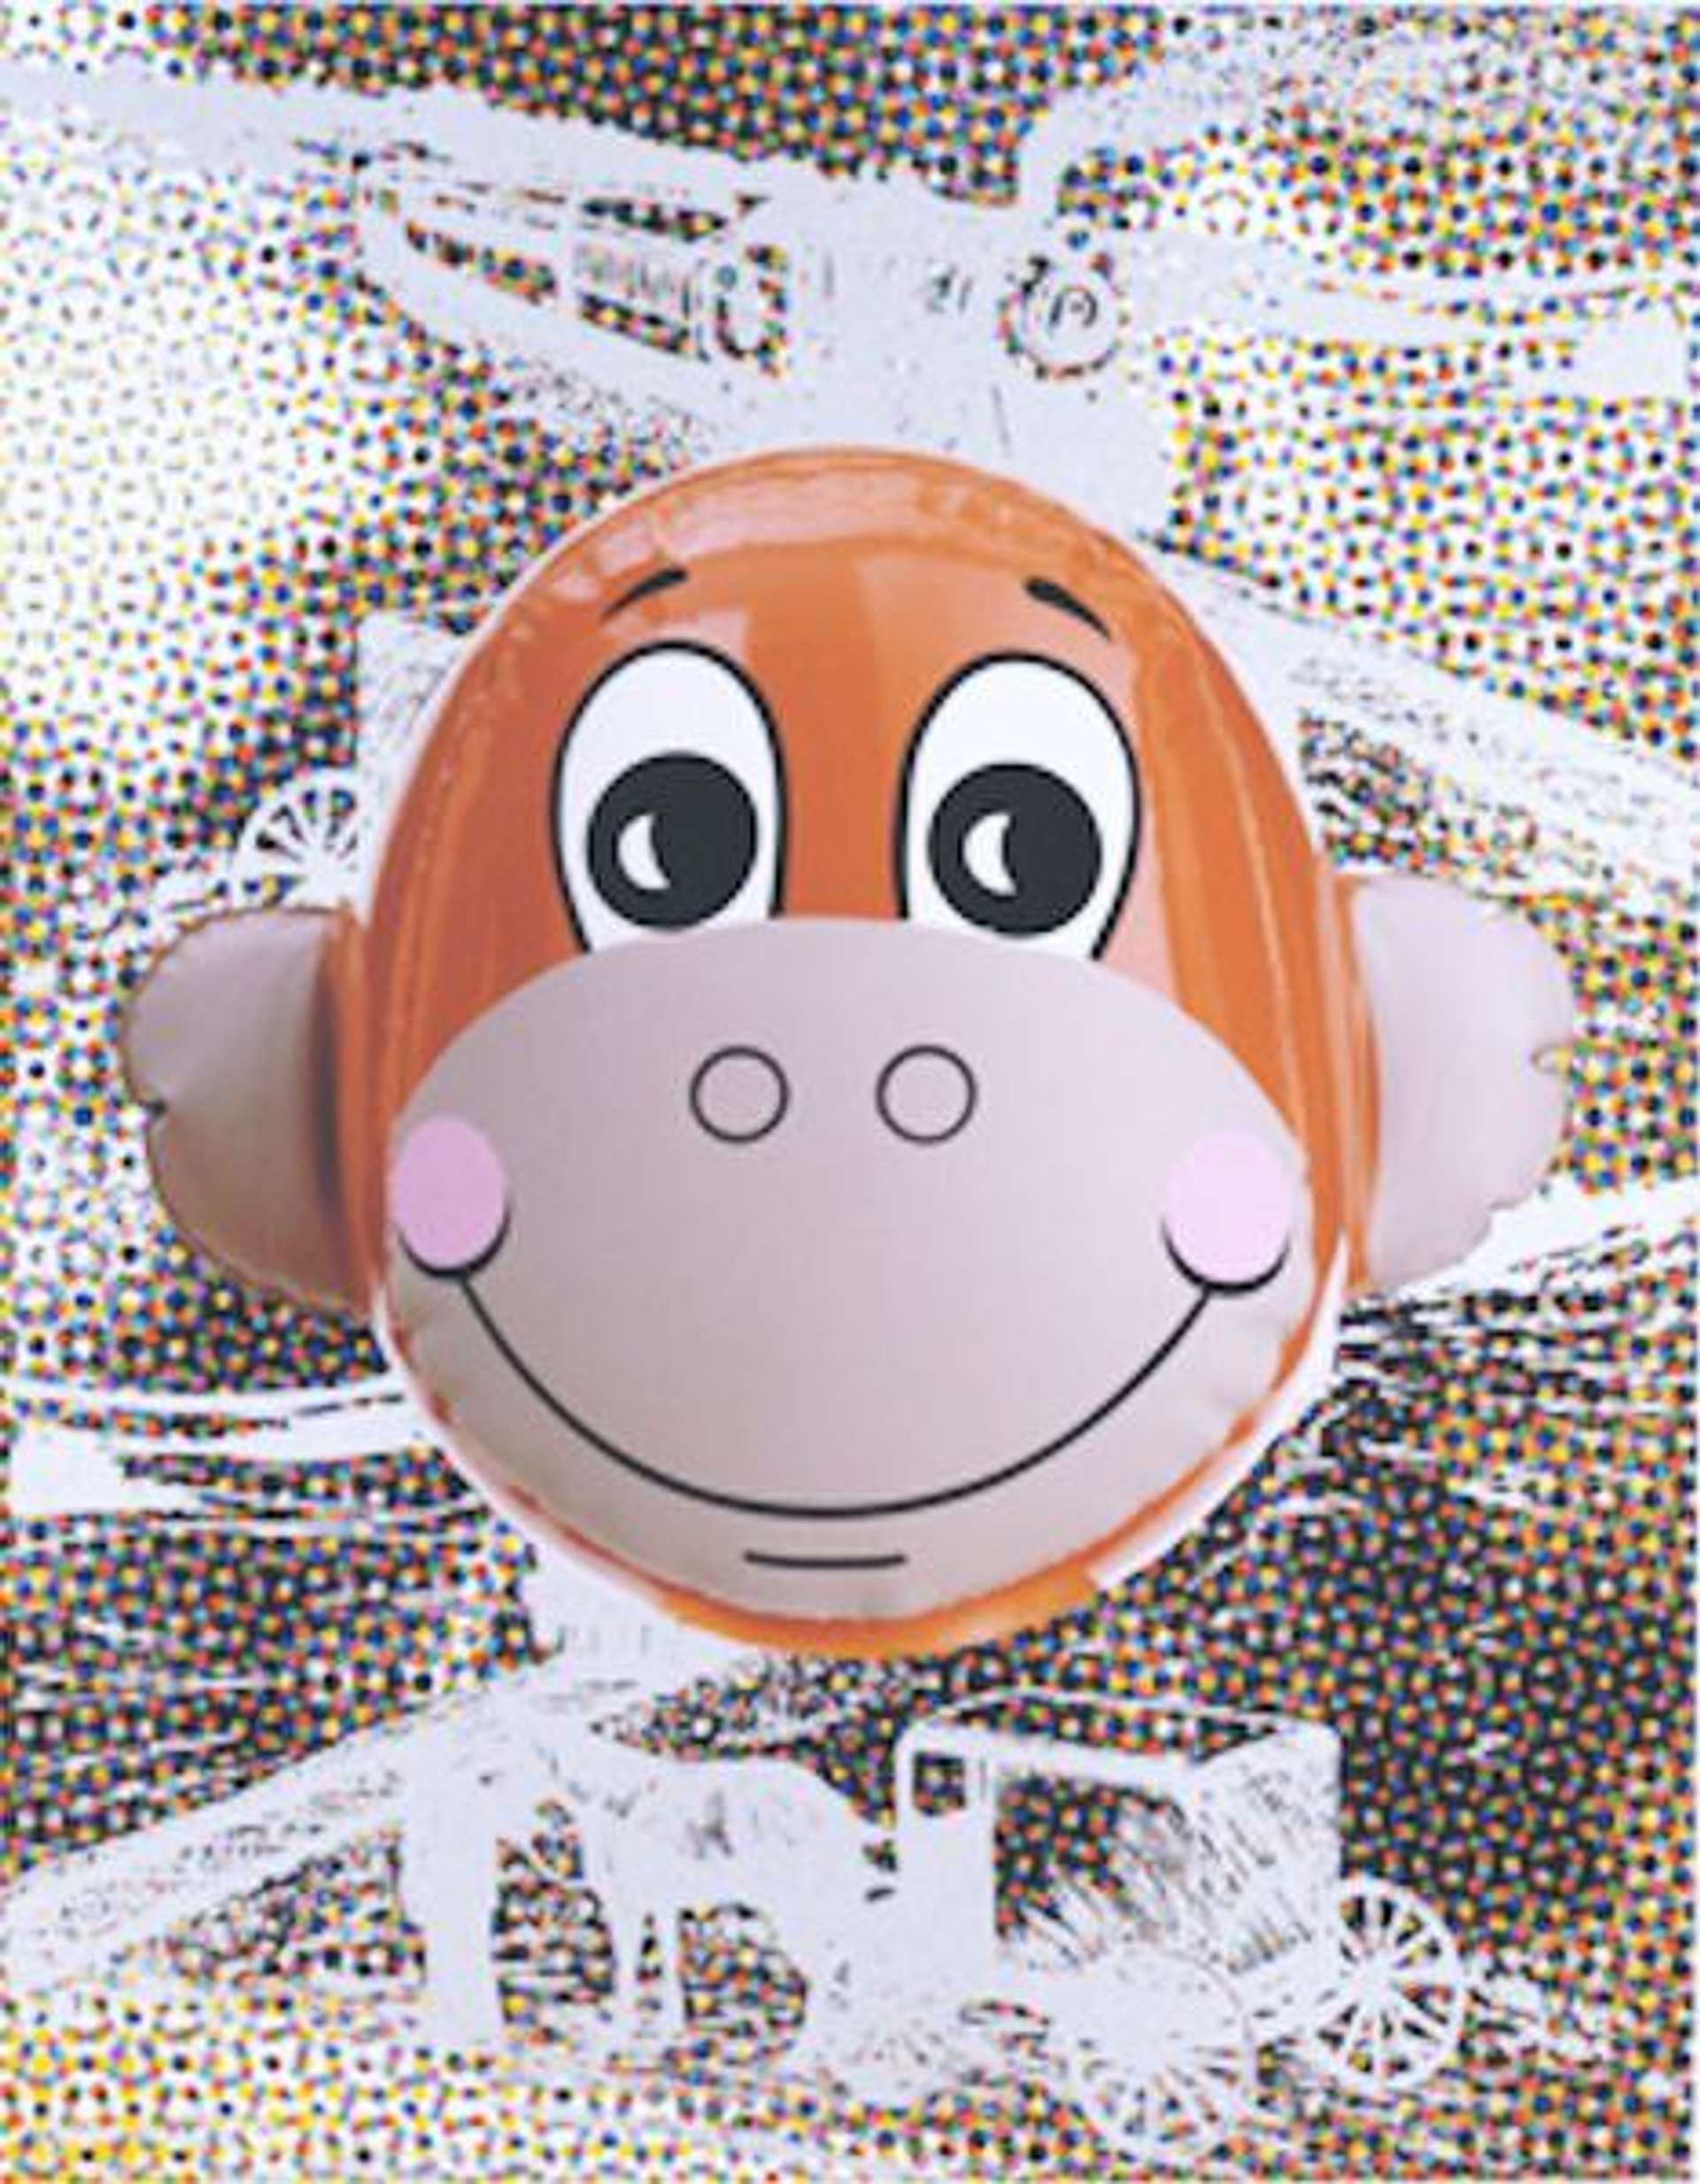 Monkey Train (dots) - Signed Print by Jeff Koons 2007 - MyArtBroker